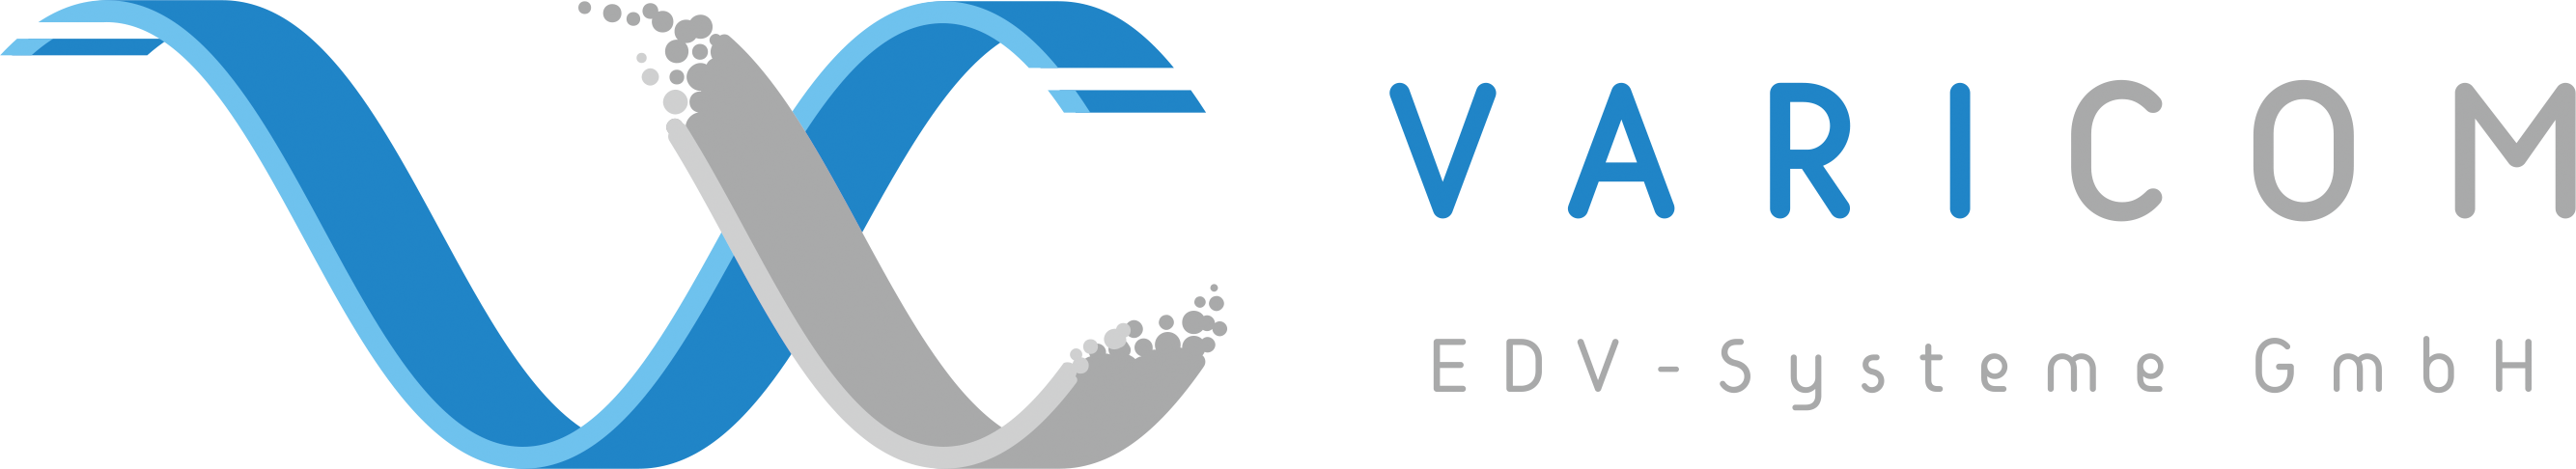 VariCom EDV-Systeme GmbH